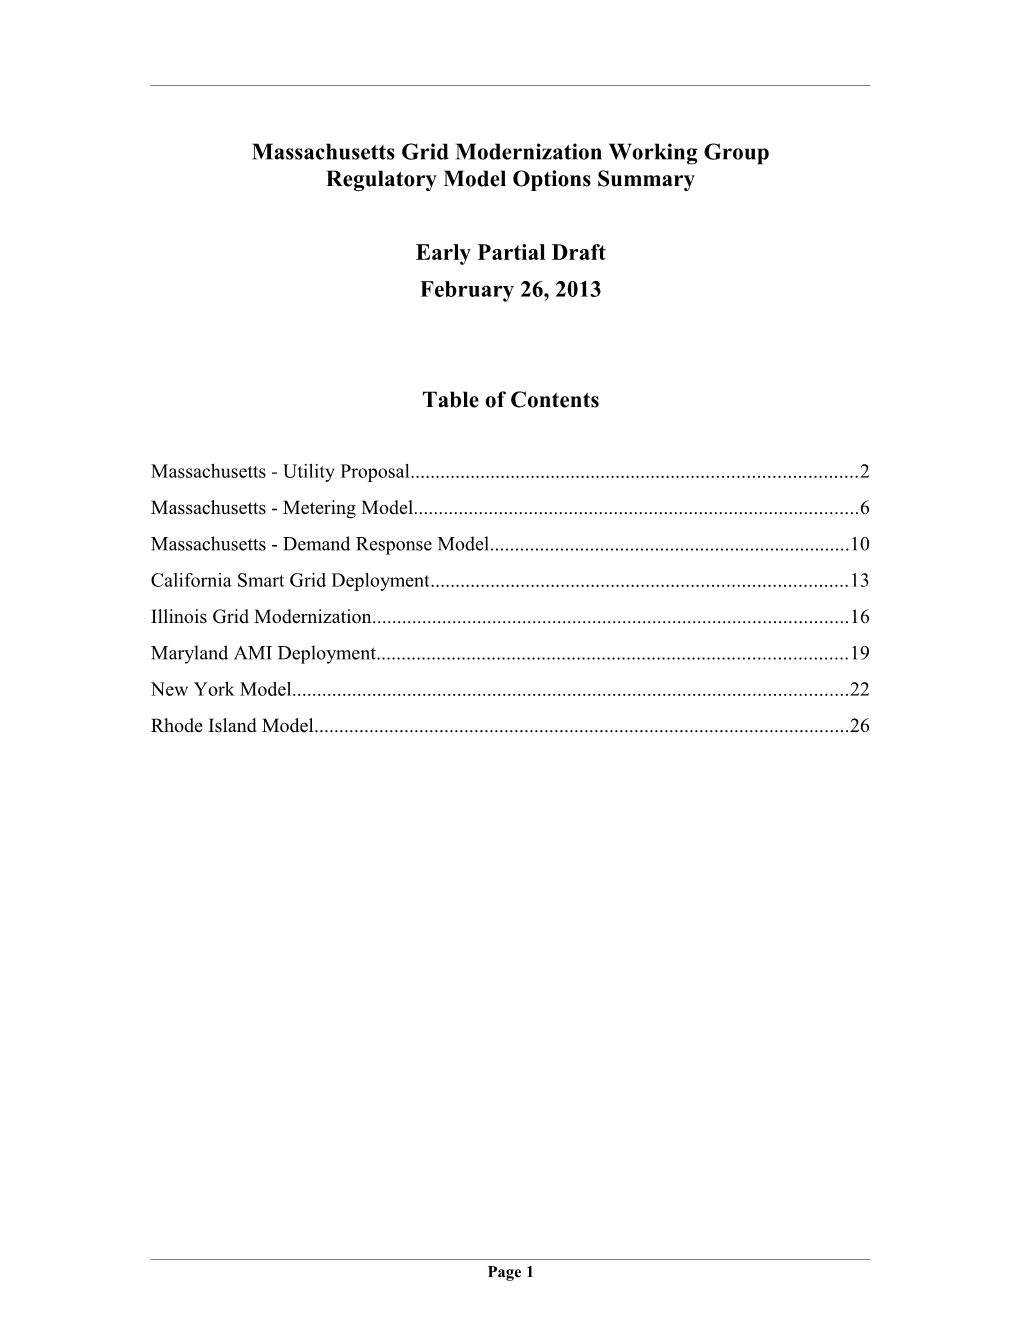 Massachusetts Grid Modernization Working Group Regulatory Model Options Summary